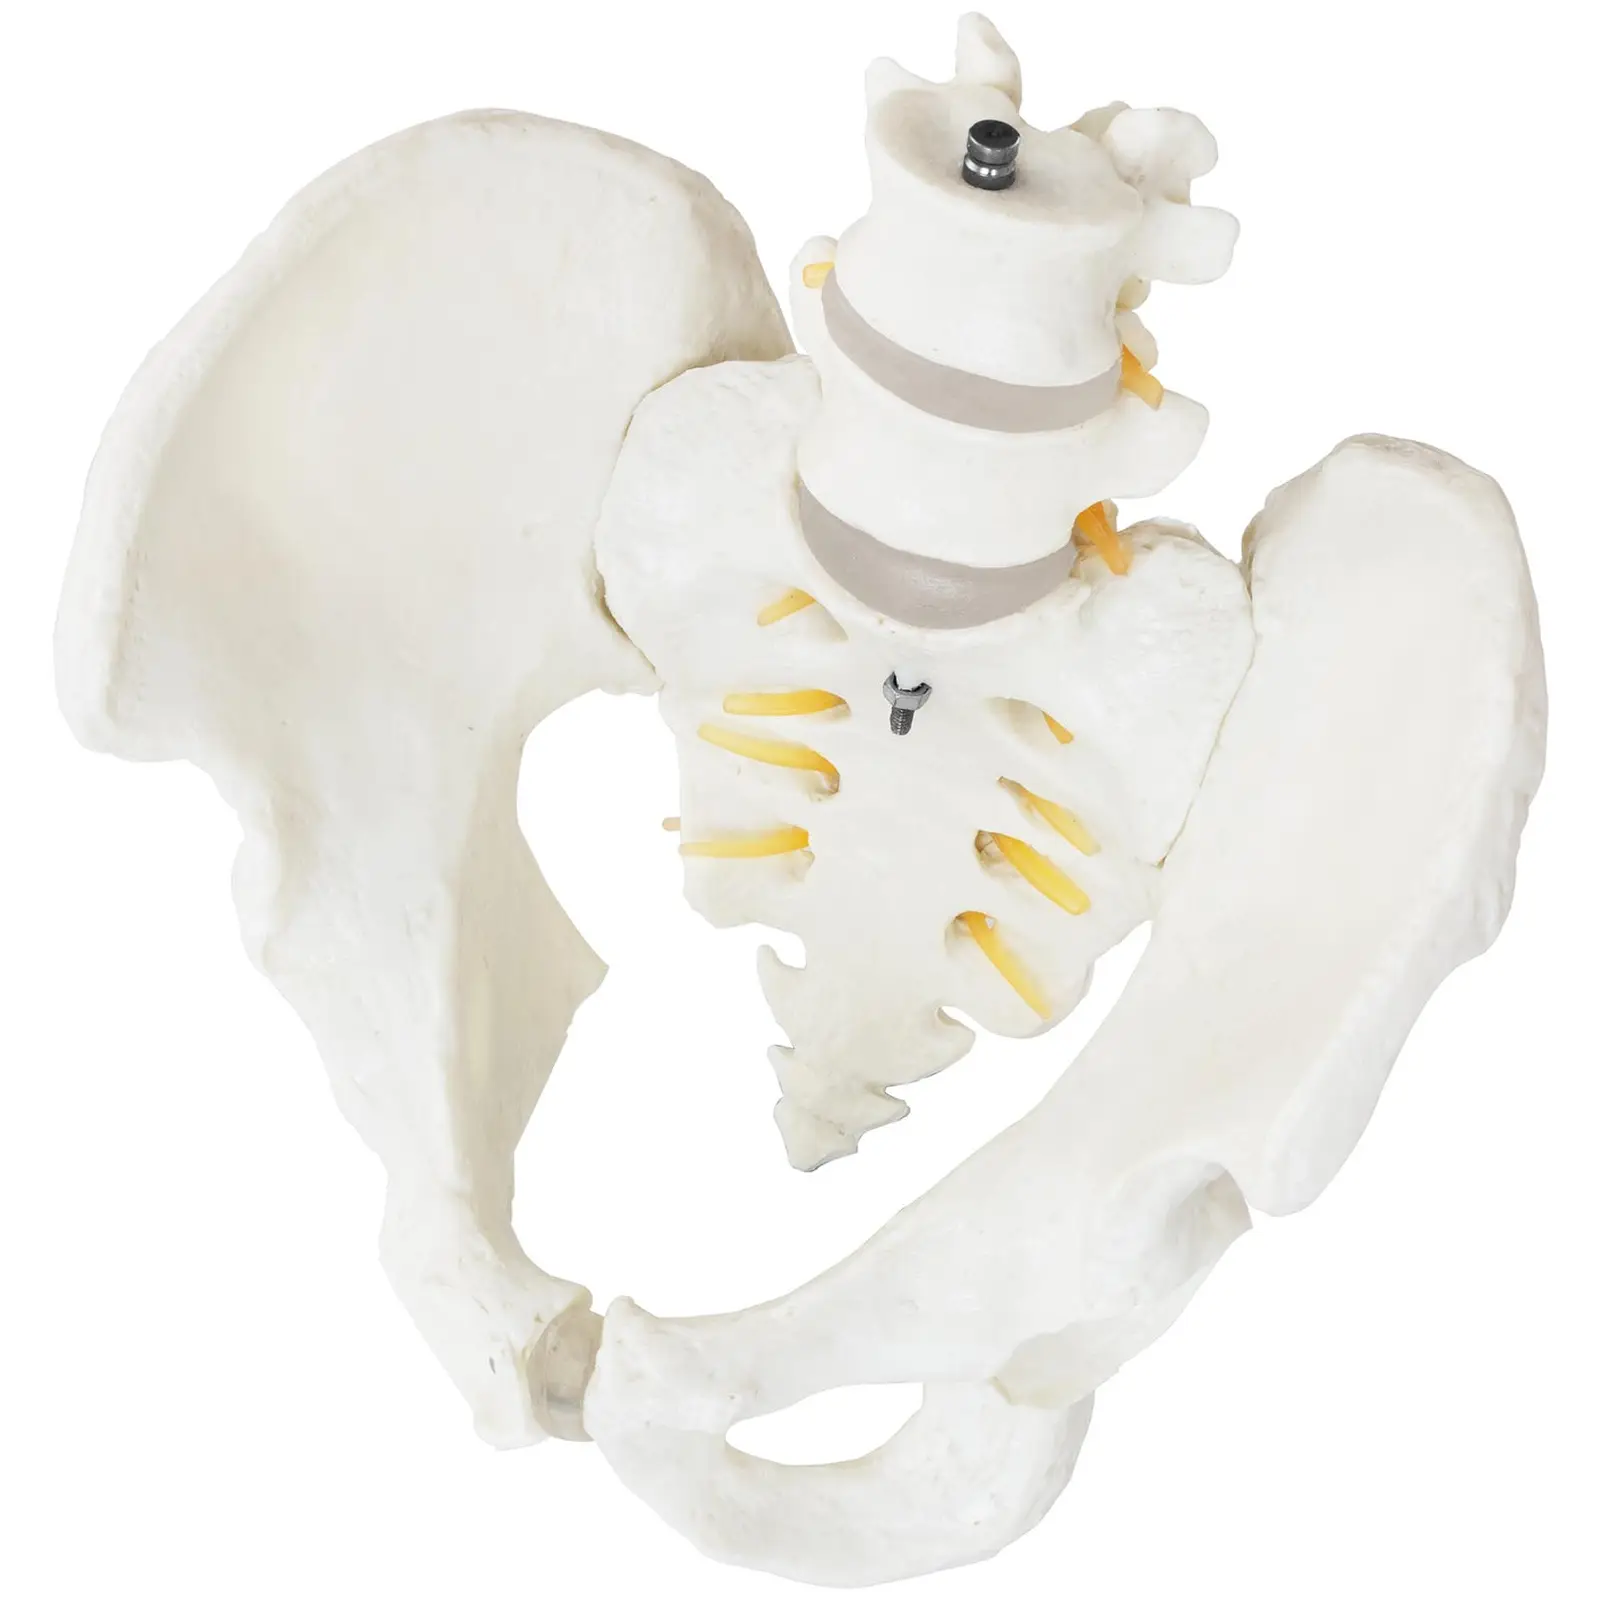 Pélvis com vértebras lombares - modelo anatómico